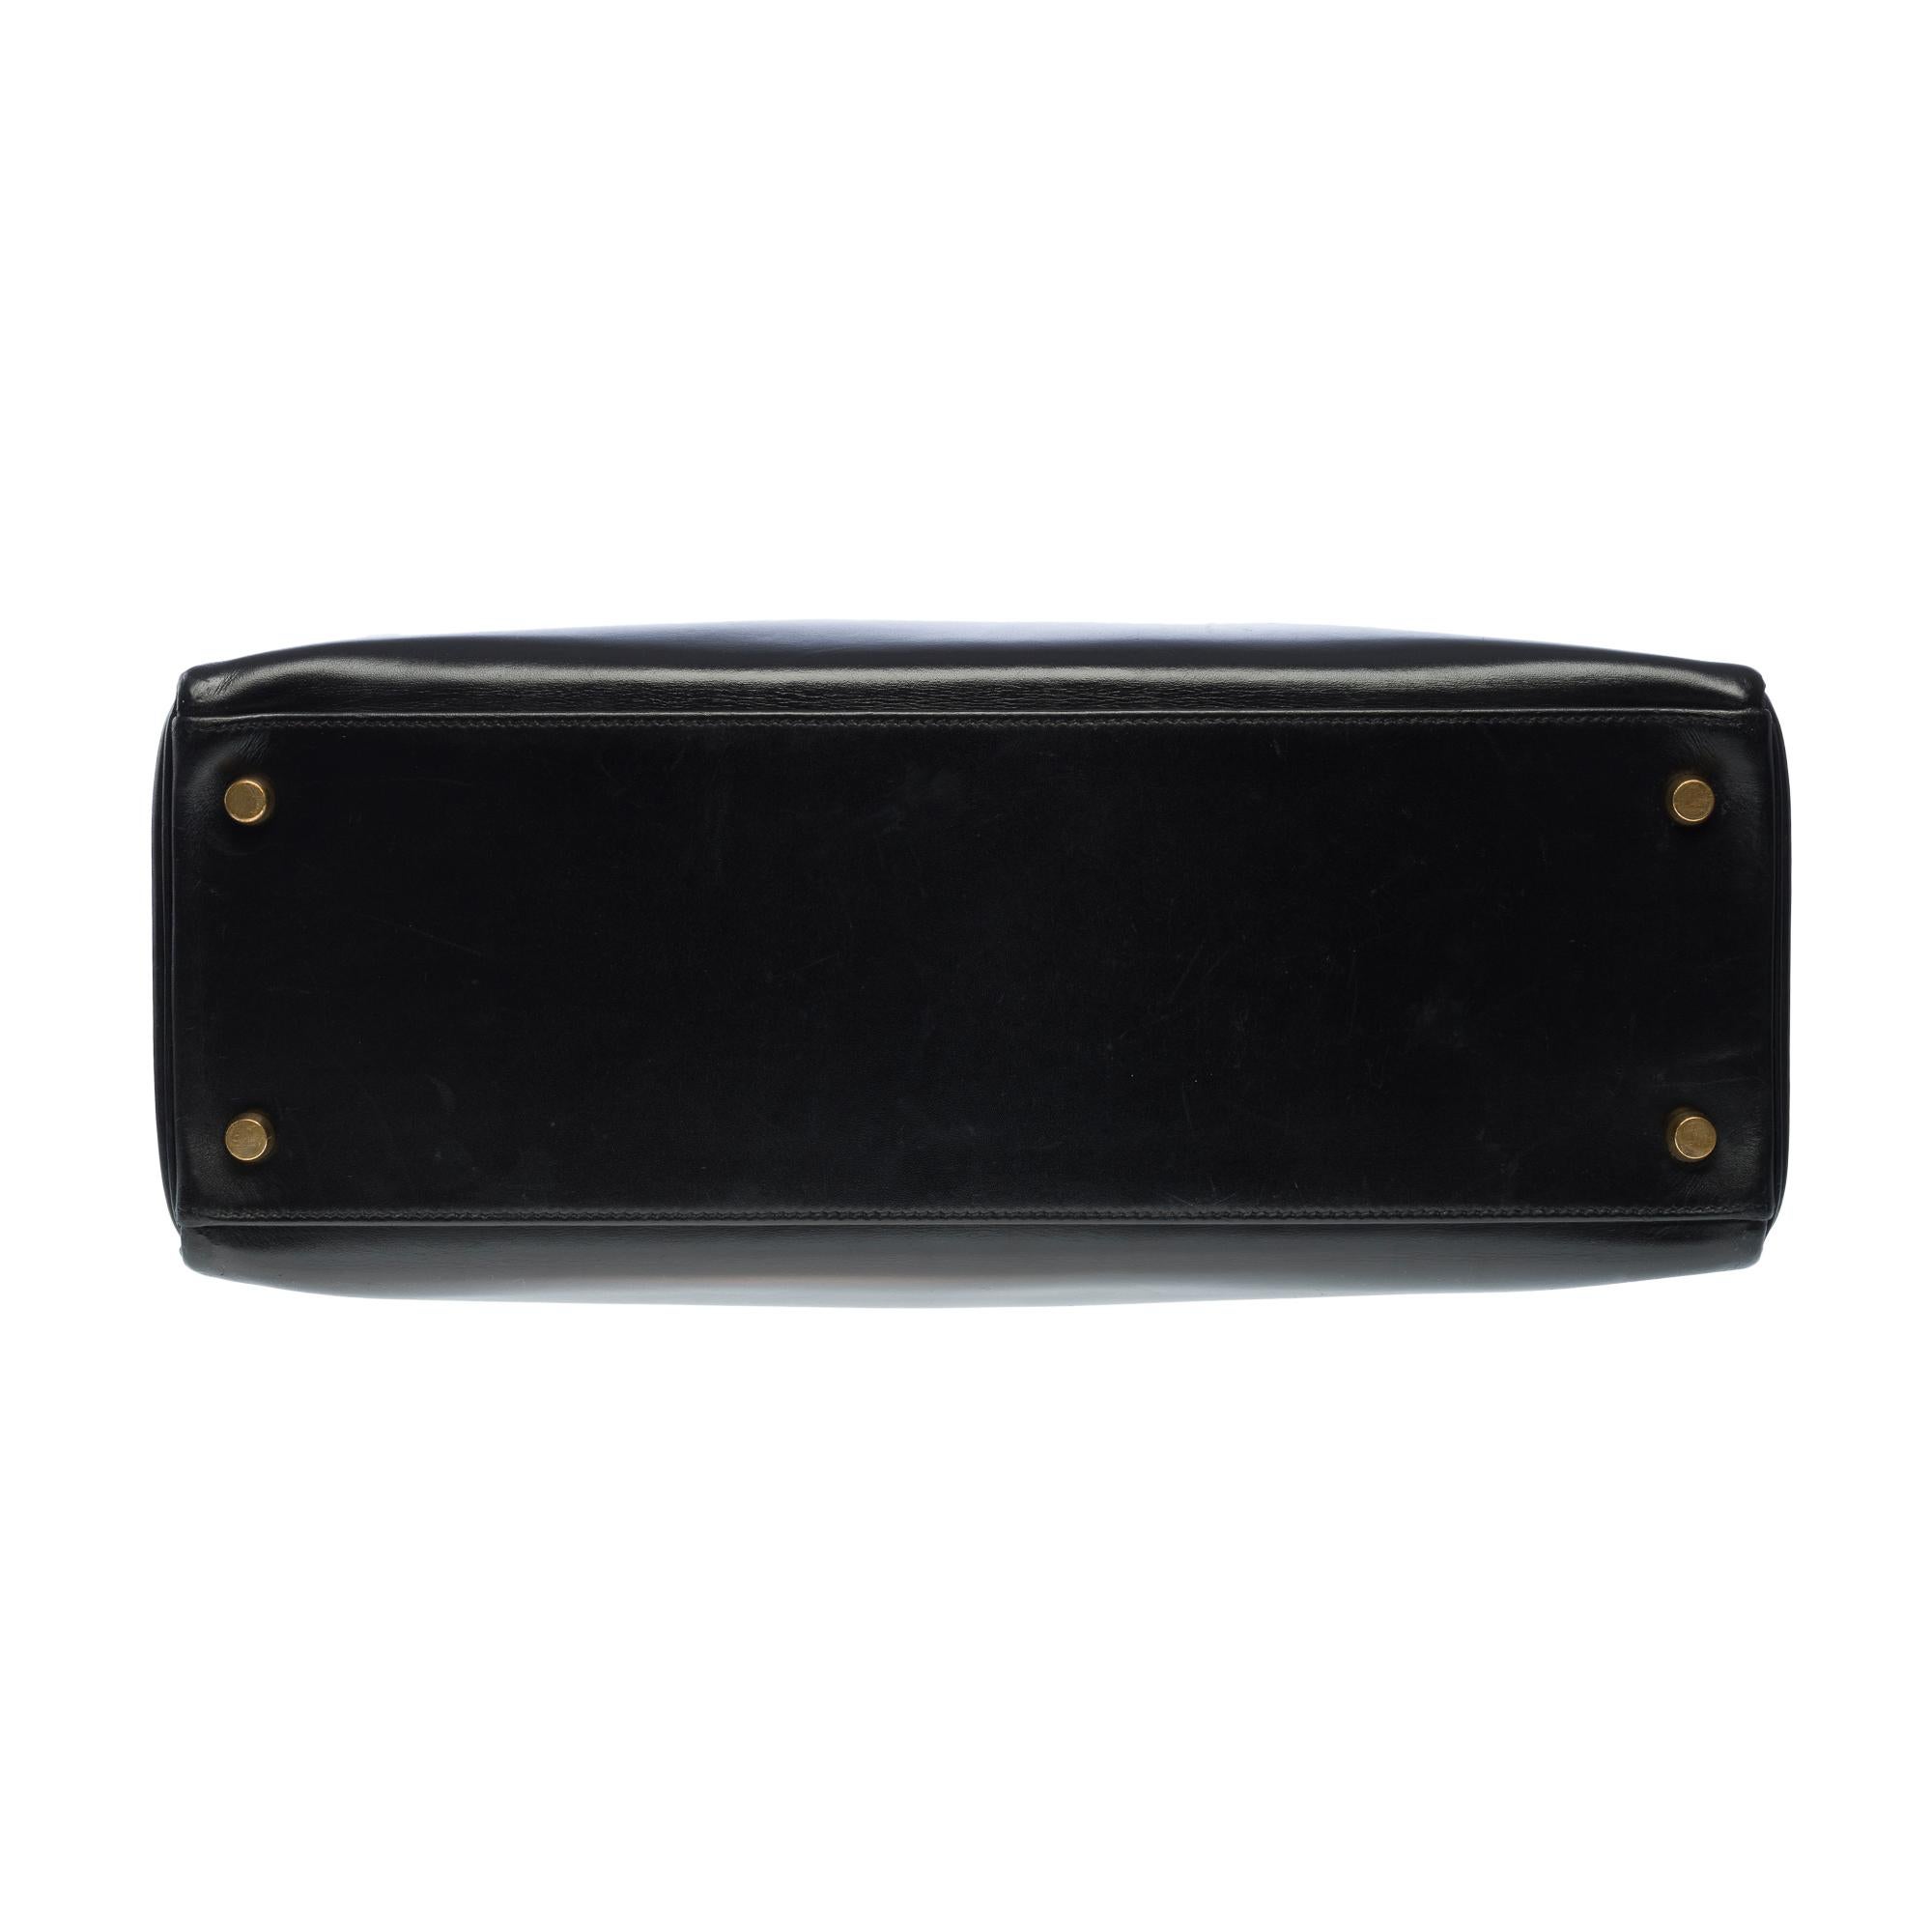 Hermès Kelly 35 retourne handbag strap in black box calfskin leather, GHW 8